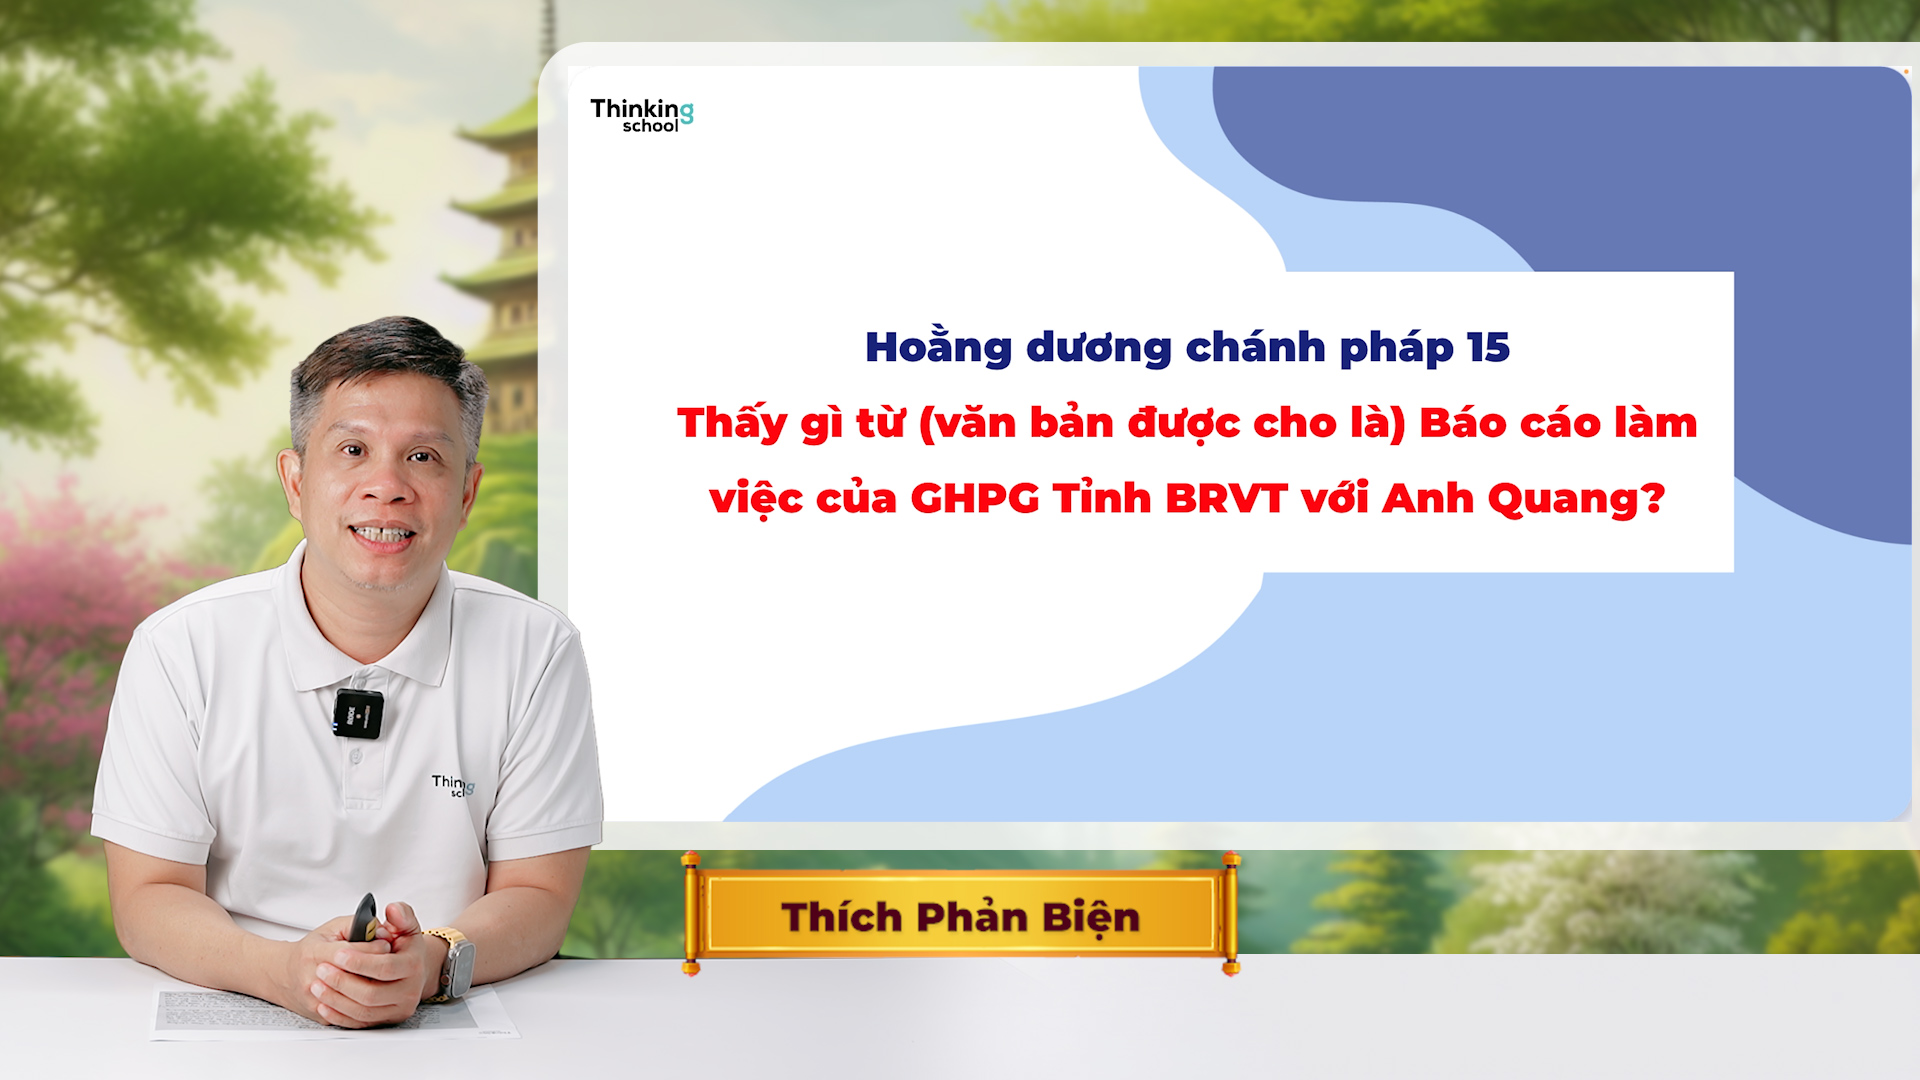 Bao cao lam viec cua GHPG Tinh BRVT voi Anh Quang